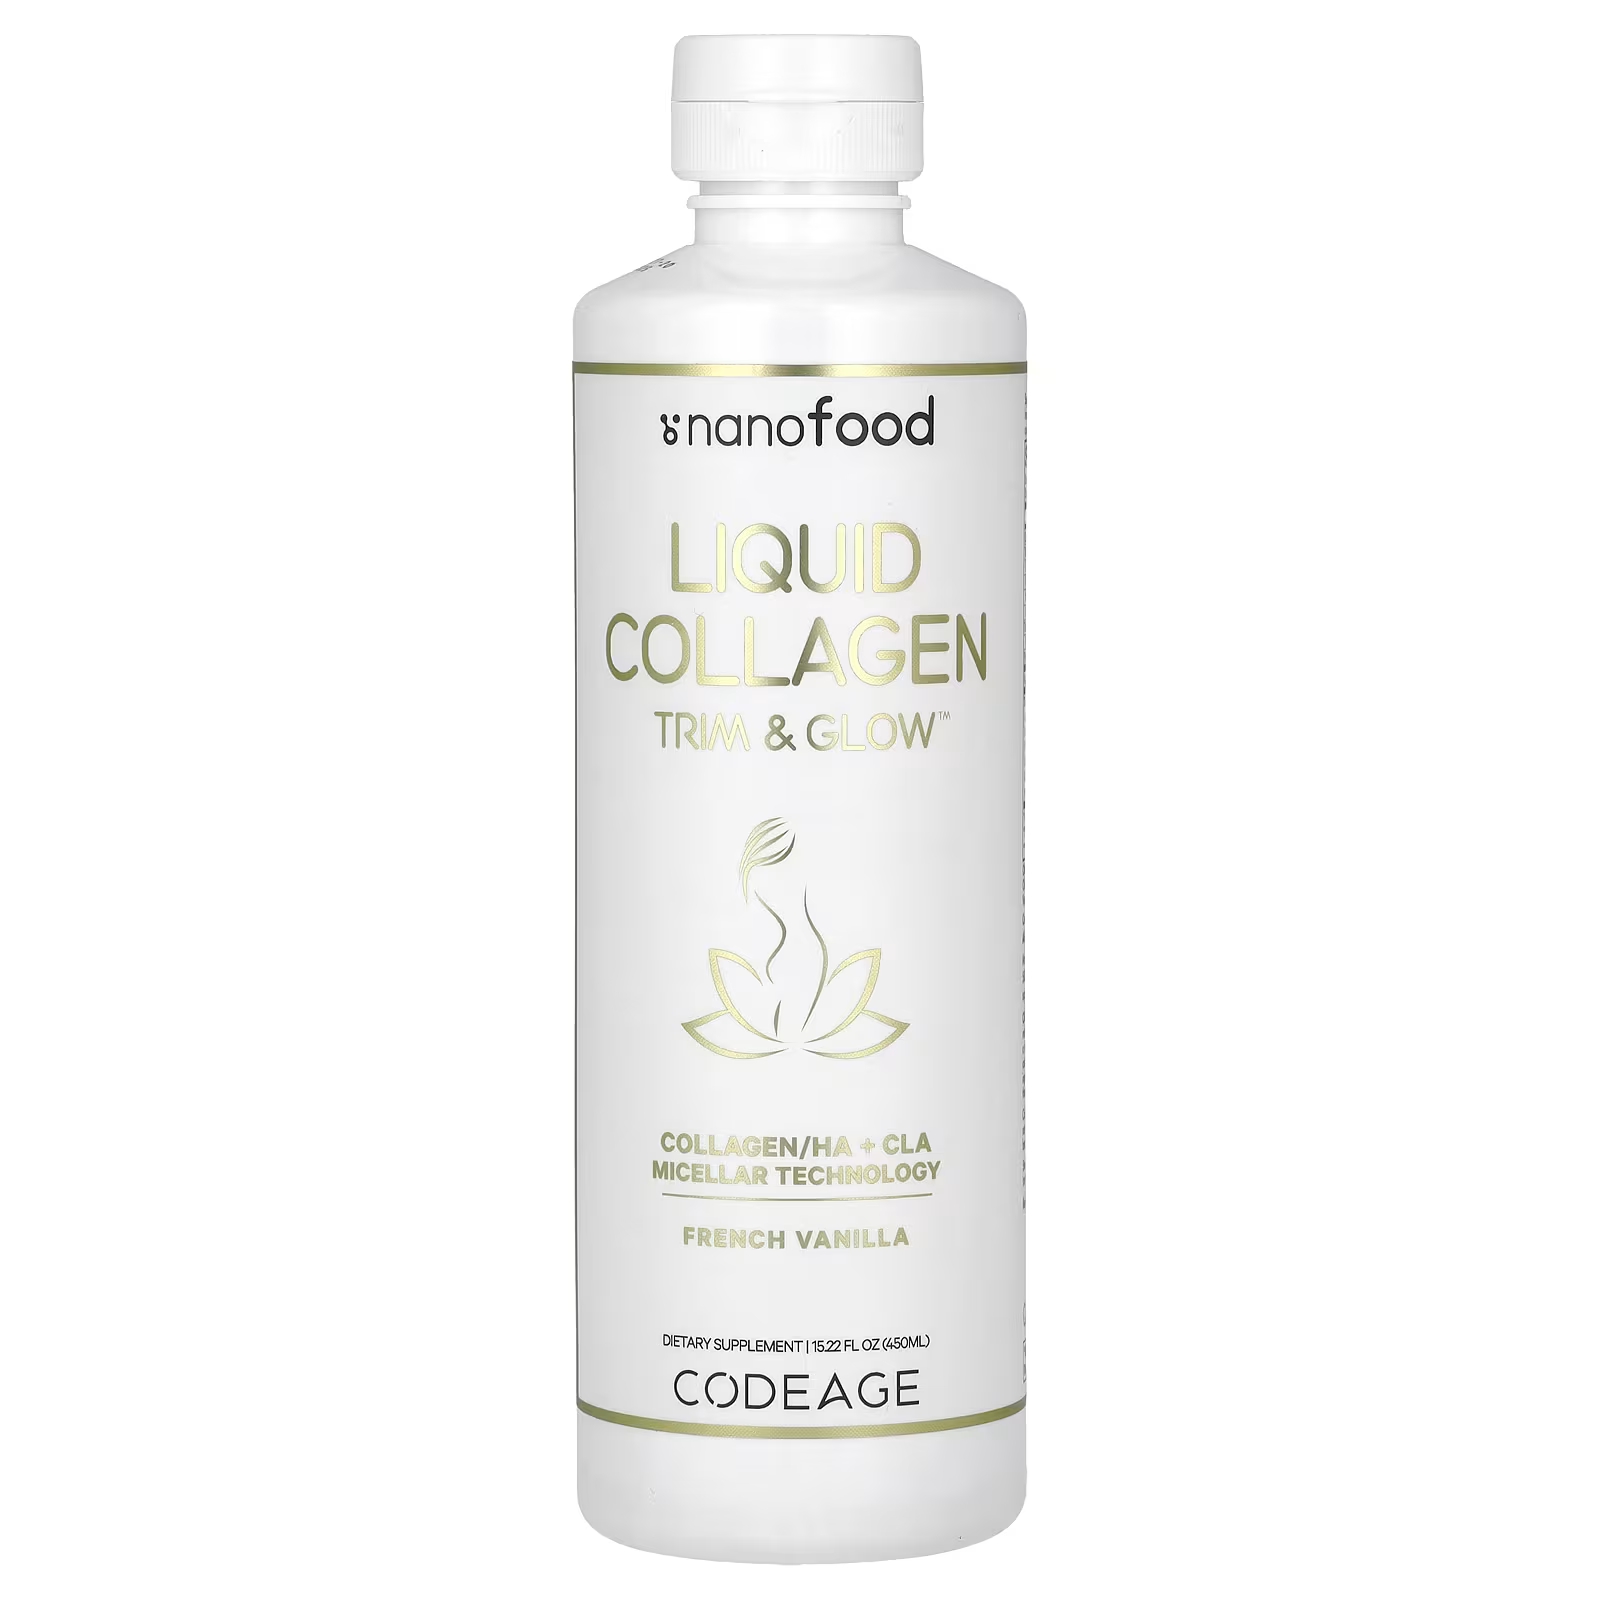 Codeage Nanofood Liquid Collagen Trim & Glow, французская ваниль, 15,22 жидких унции (450 мл) codeage nanofood liquid collagen trim